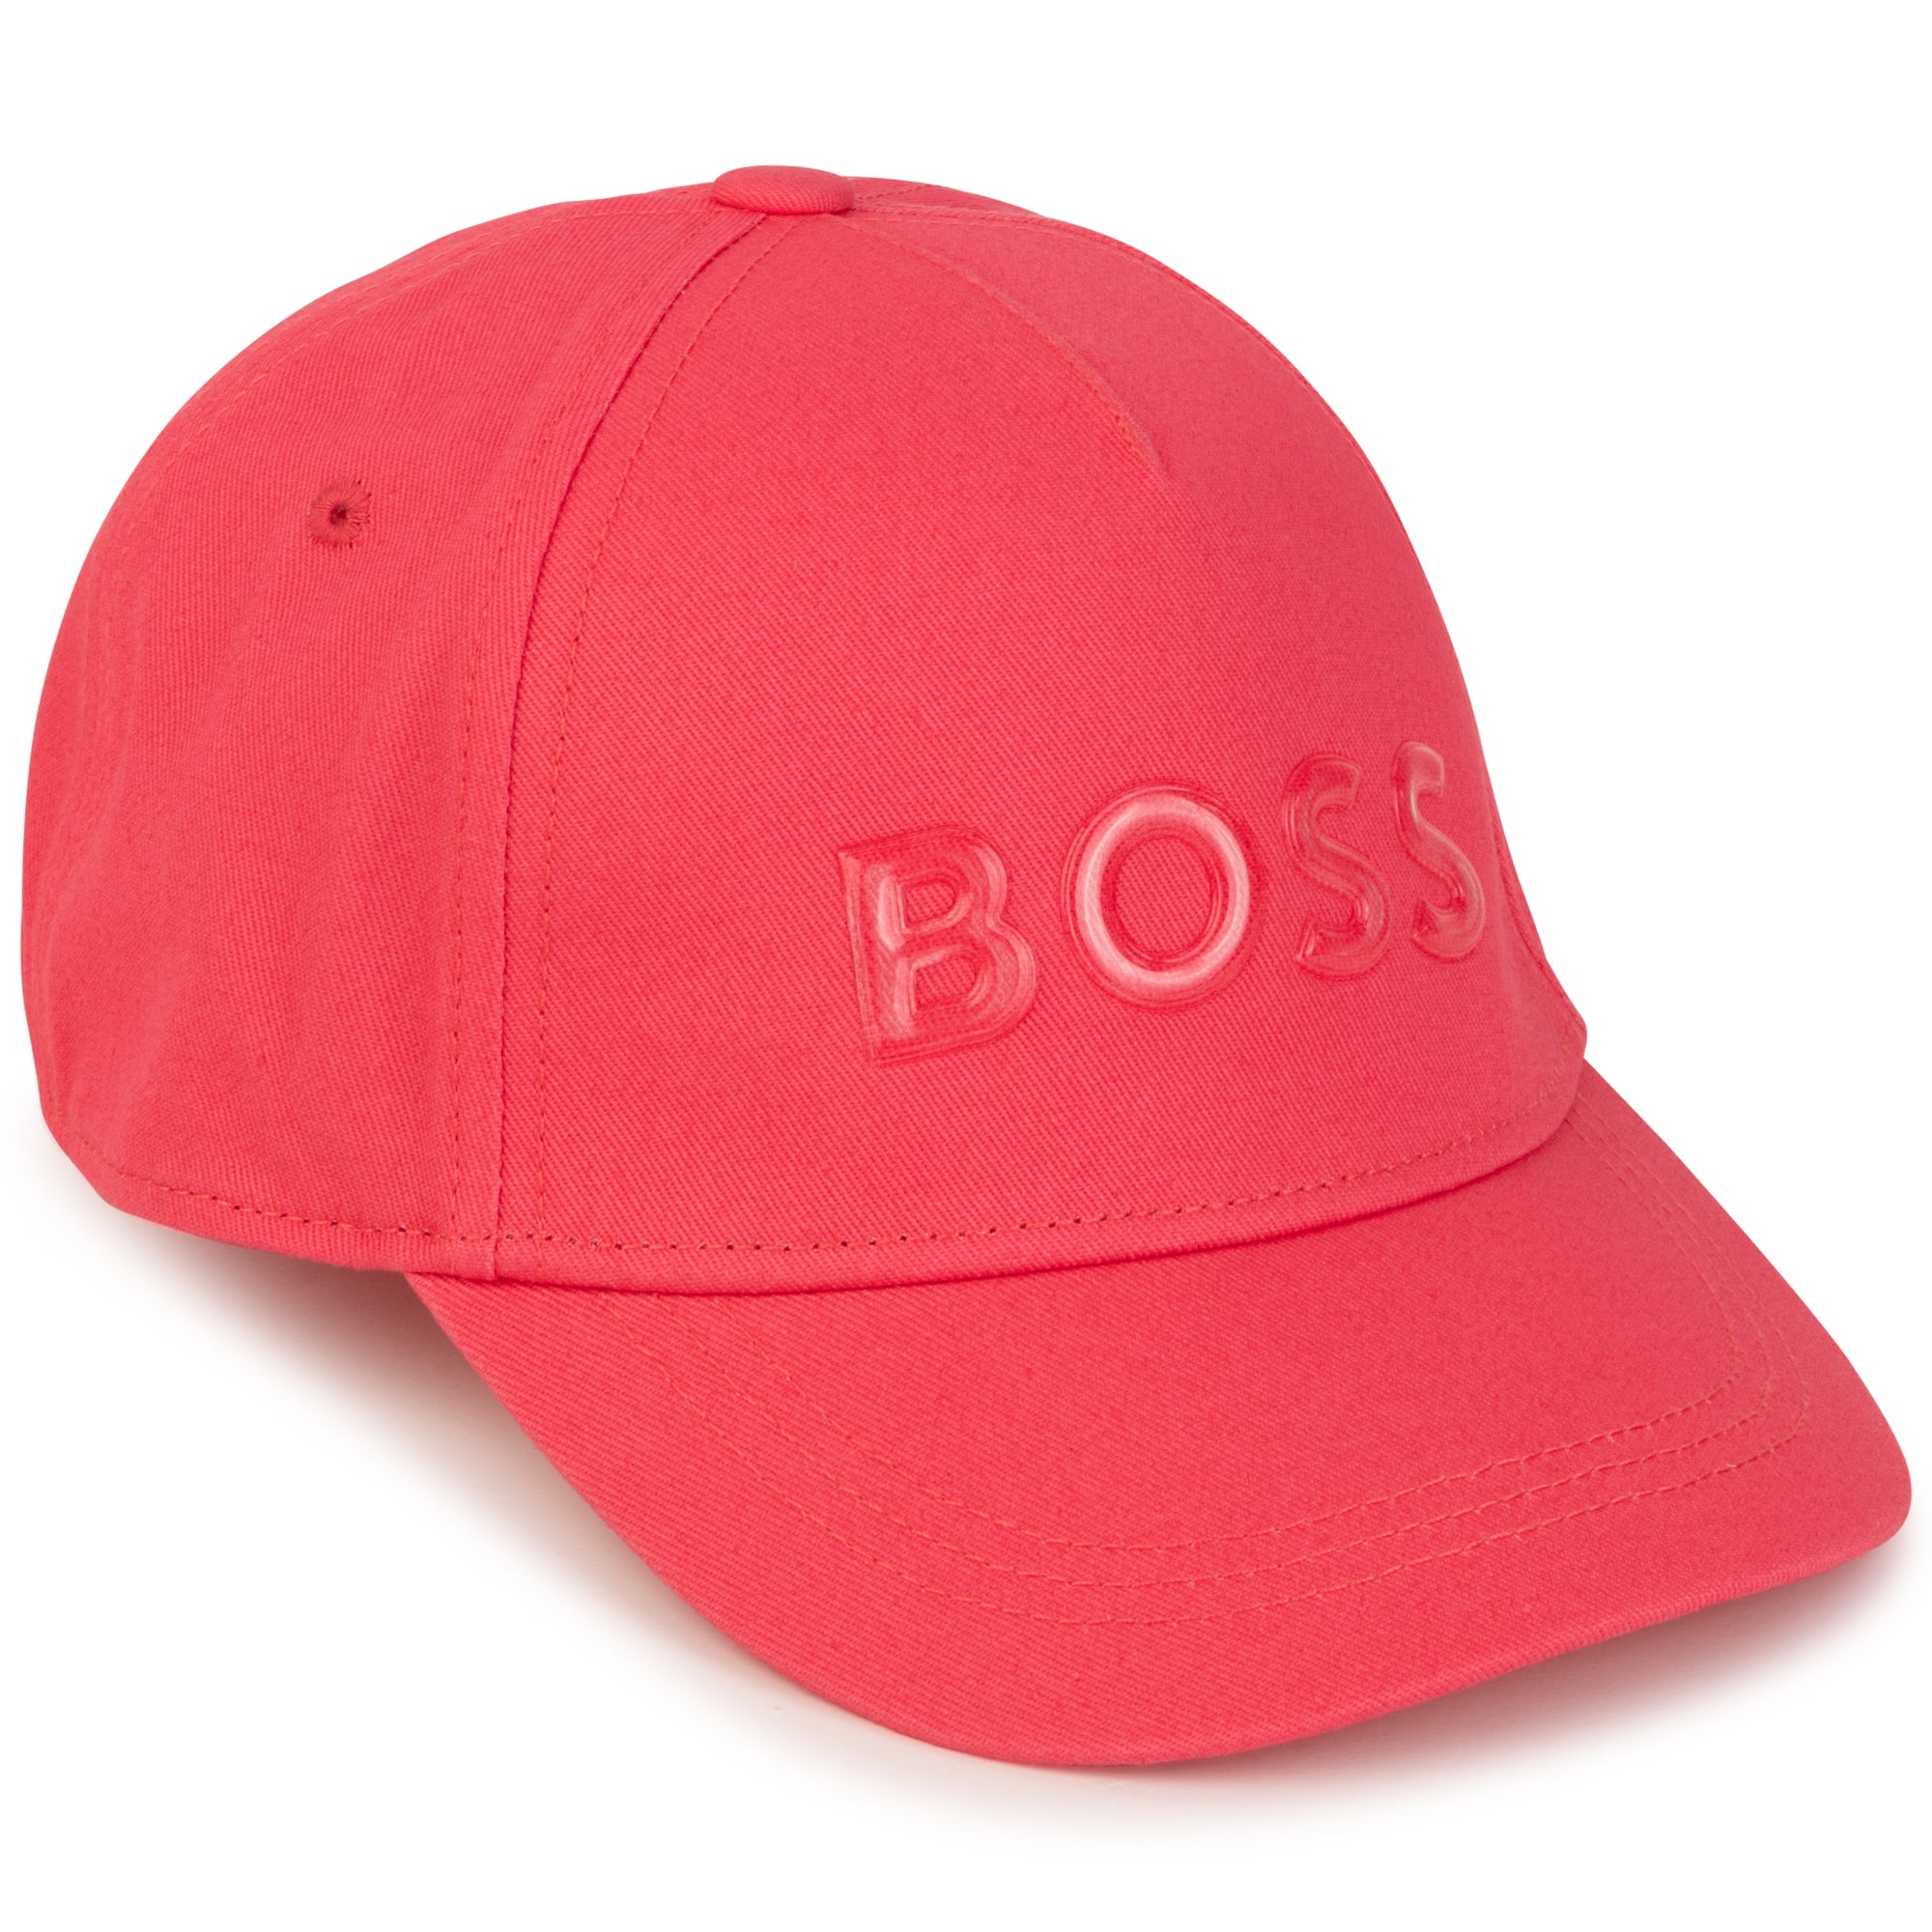 Hugo Boss Pink Cap